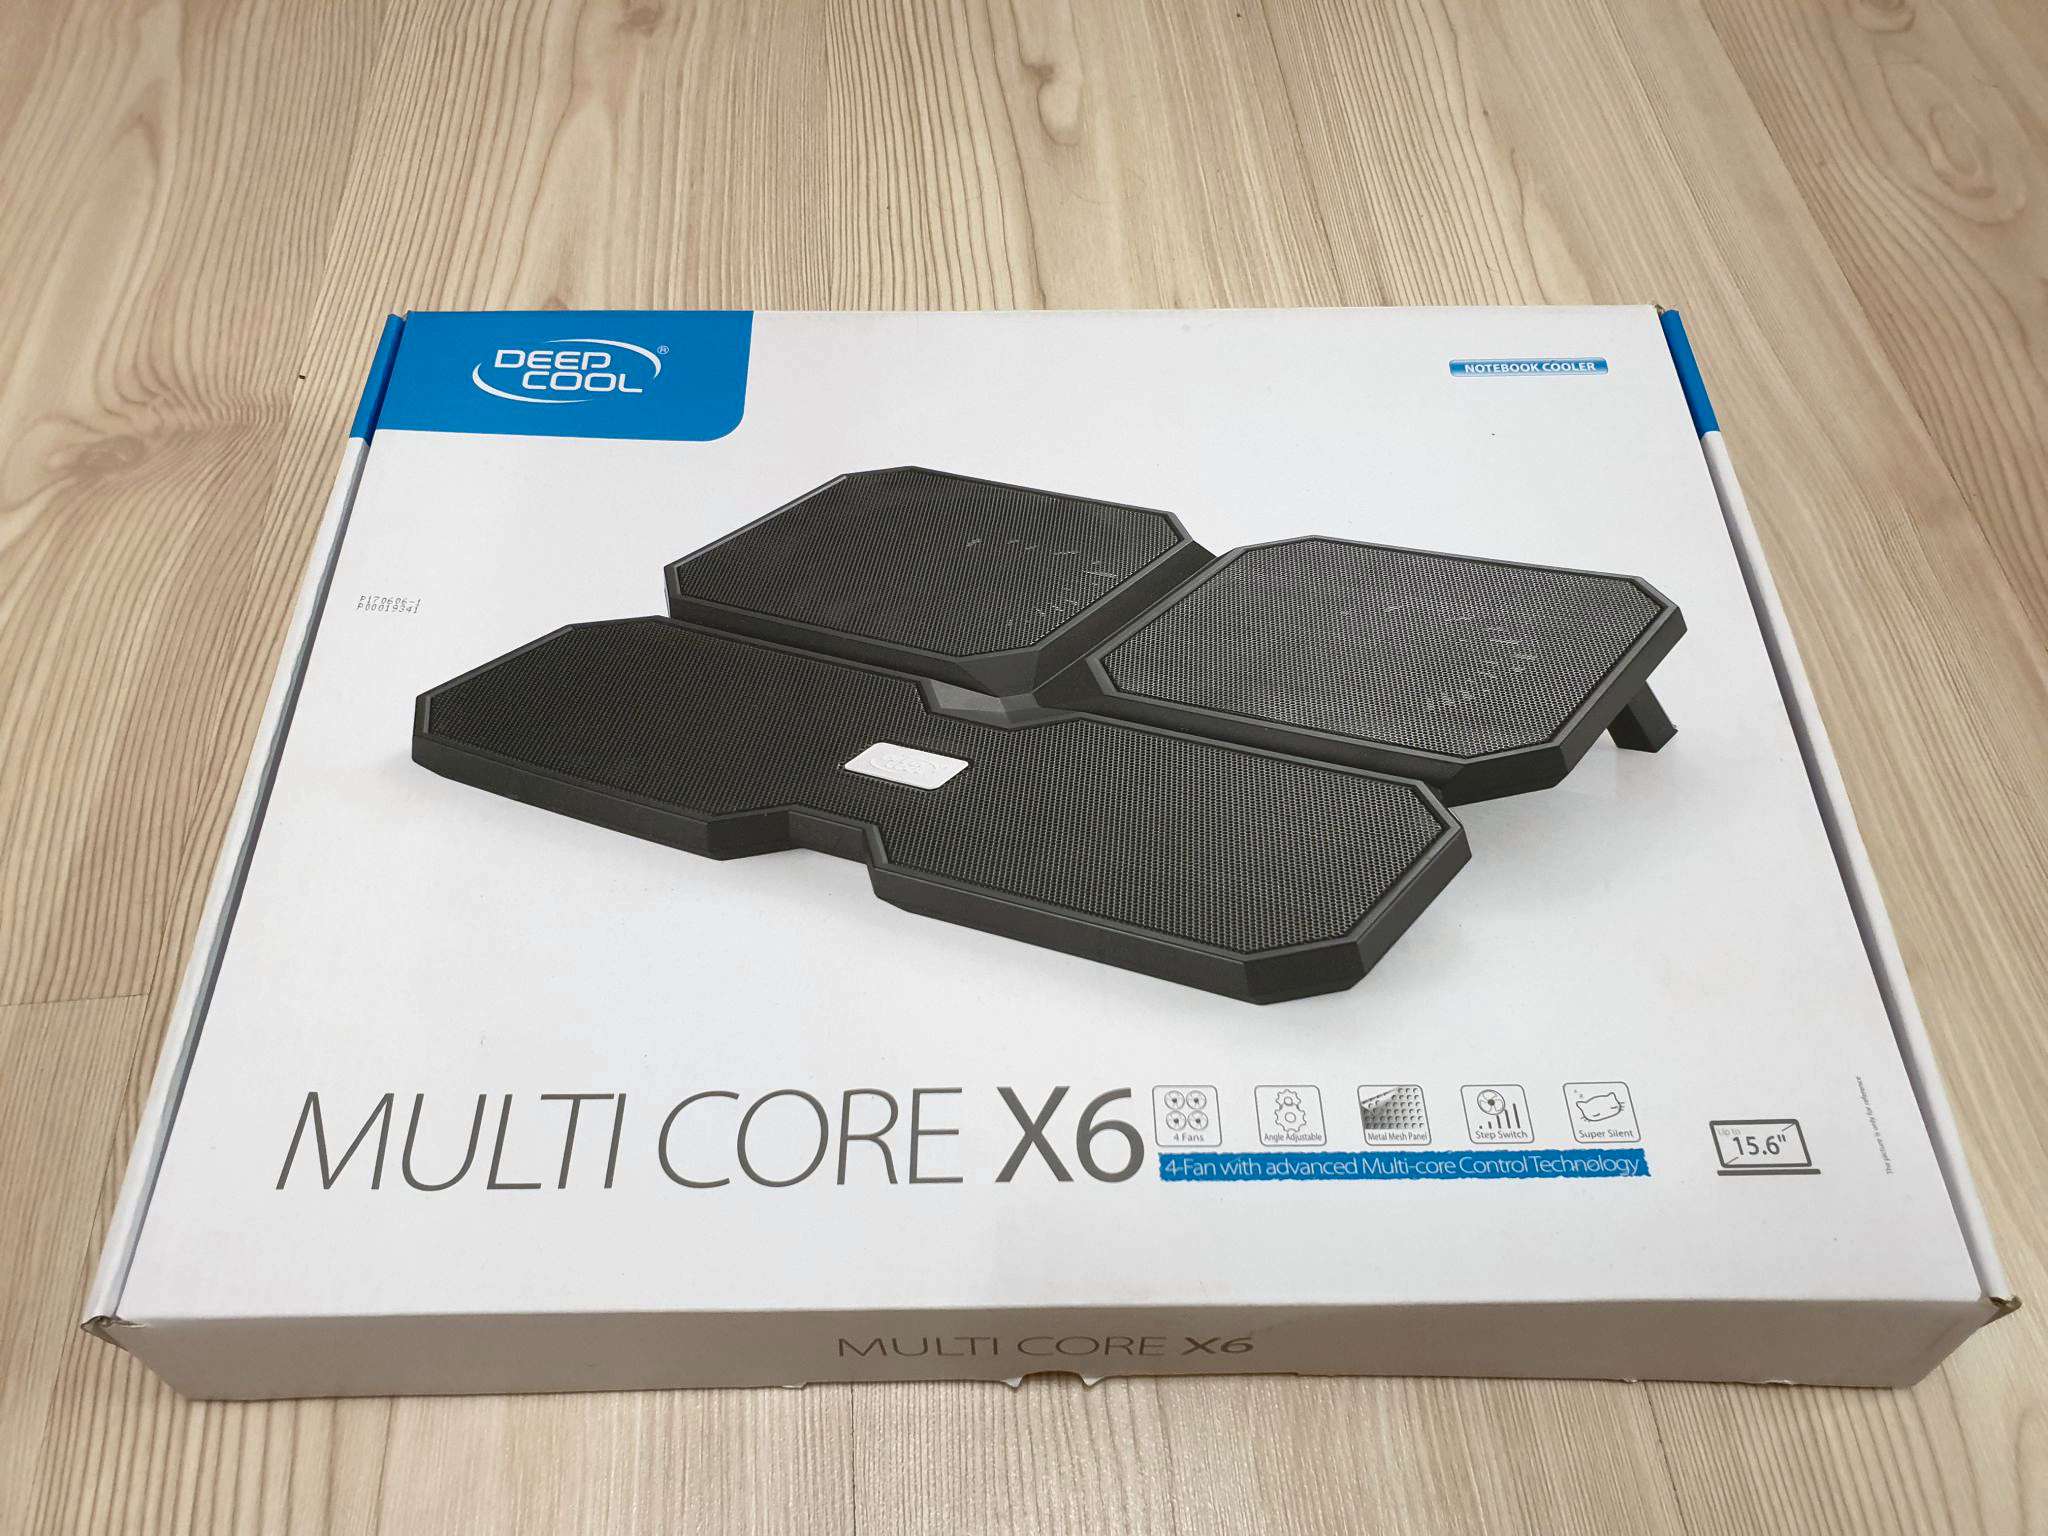 Multi core x6. Deepcool Multi Core x6. Подставка под ноутбук Deepcool Multi Core x6, dp-n422-mcx6, 15,6" (гарантия - 1 год). Подставка для ноутбука с охлаждением Deepcool Multi Core x6. Охлаждение для ноутбука Deepcool Multicore x6.